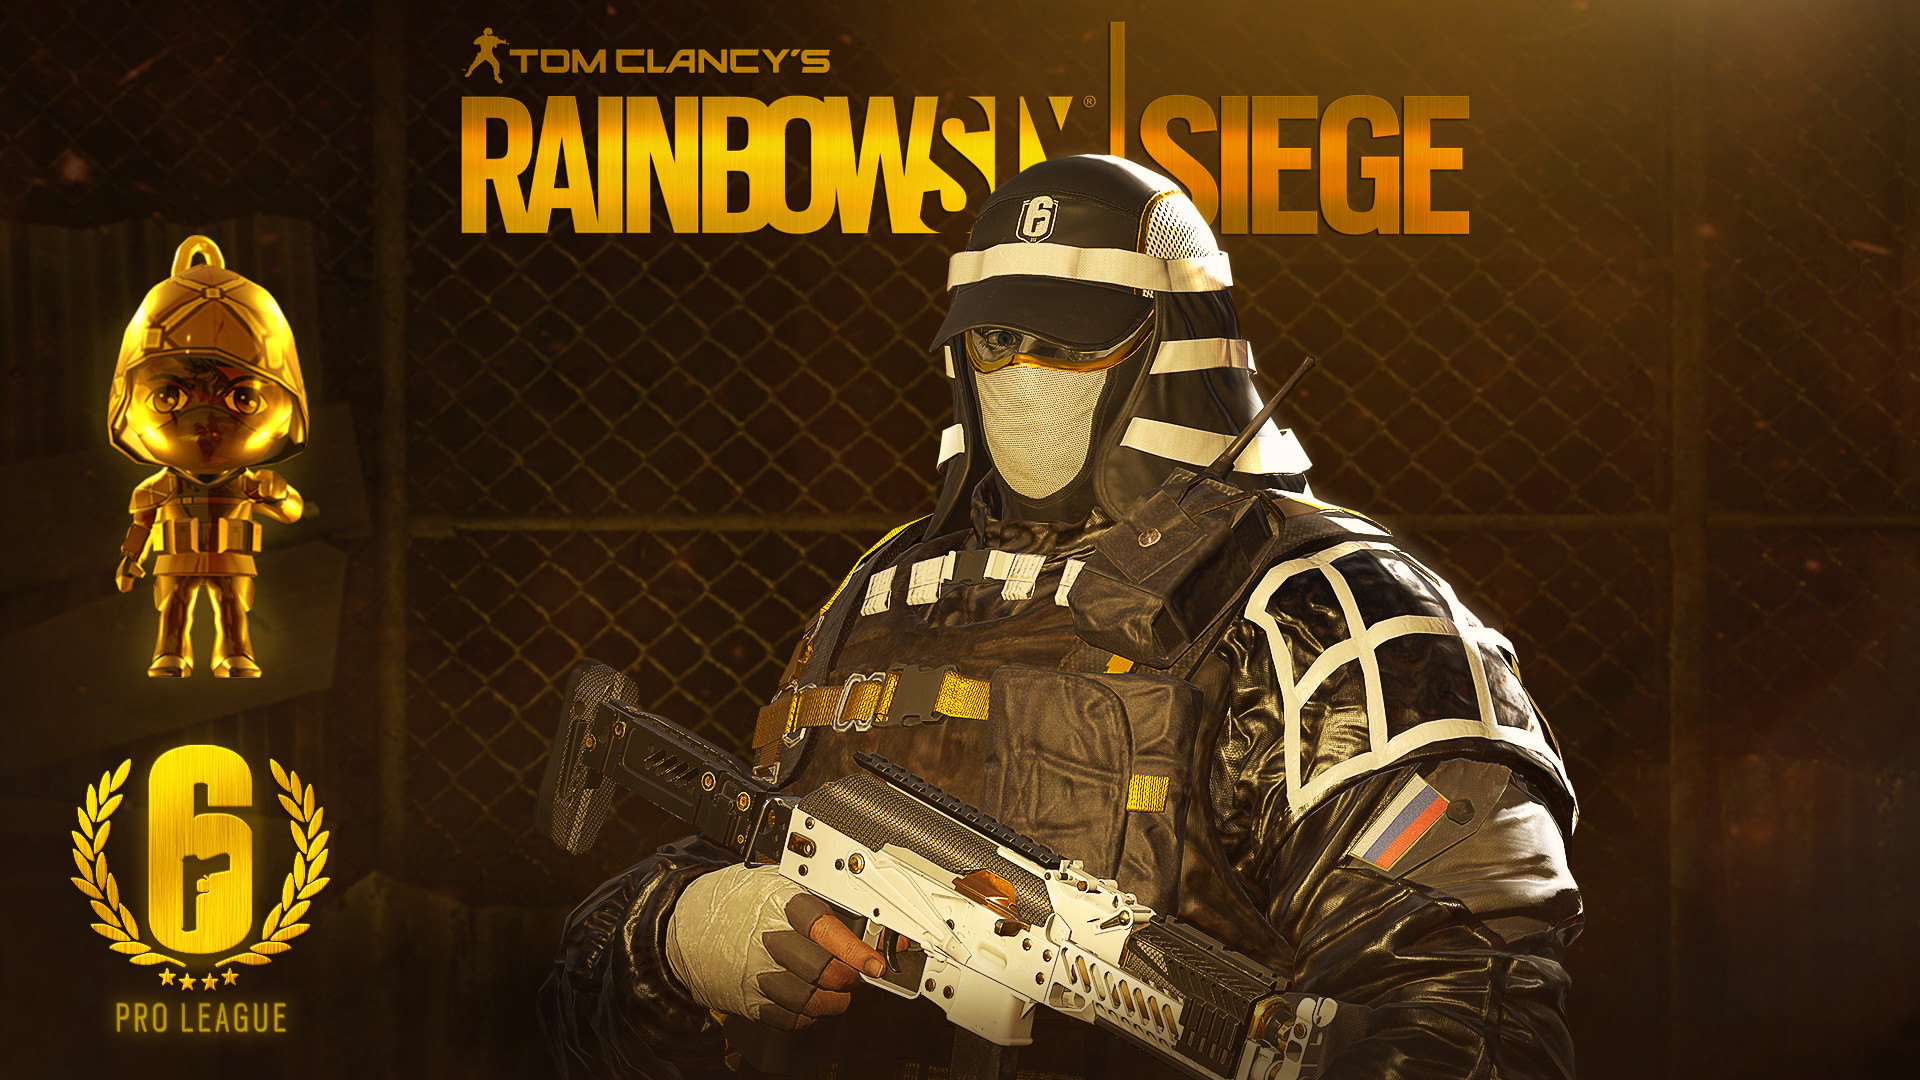 Tom Clancy's Rainbow Six: Siege League Kapkan Set (2018) promotional art